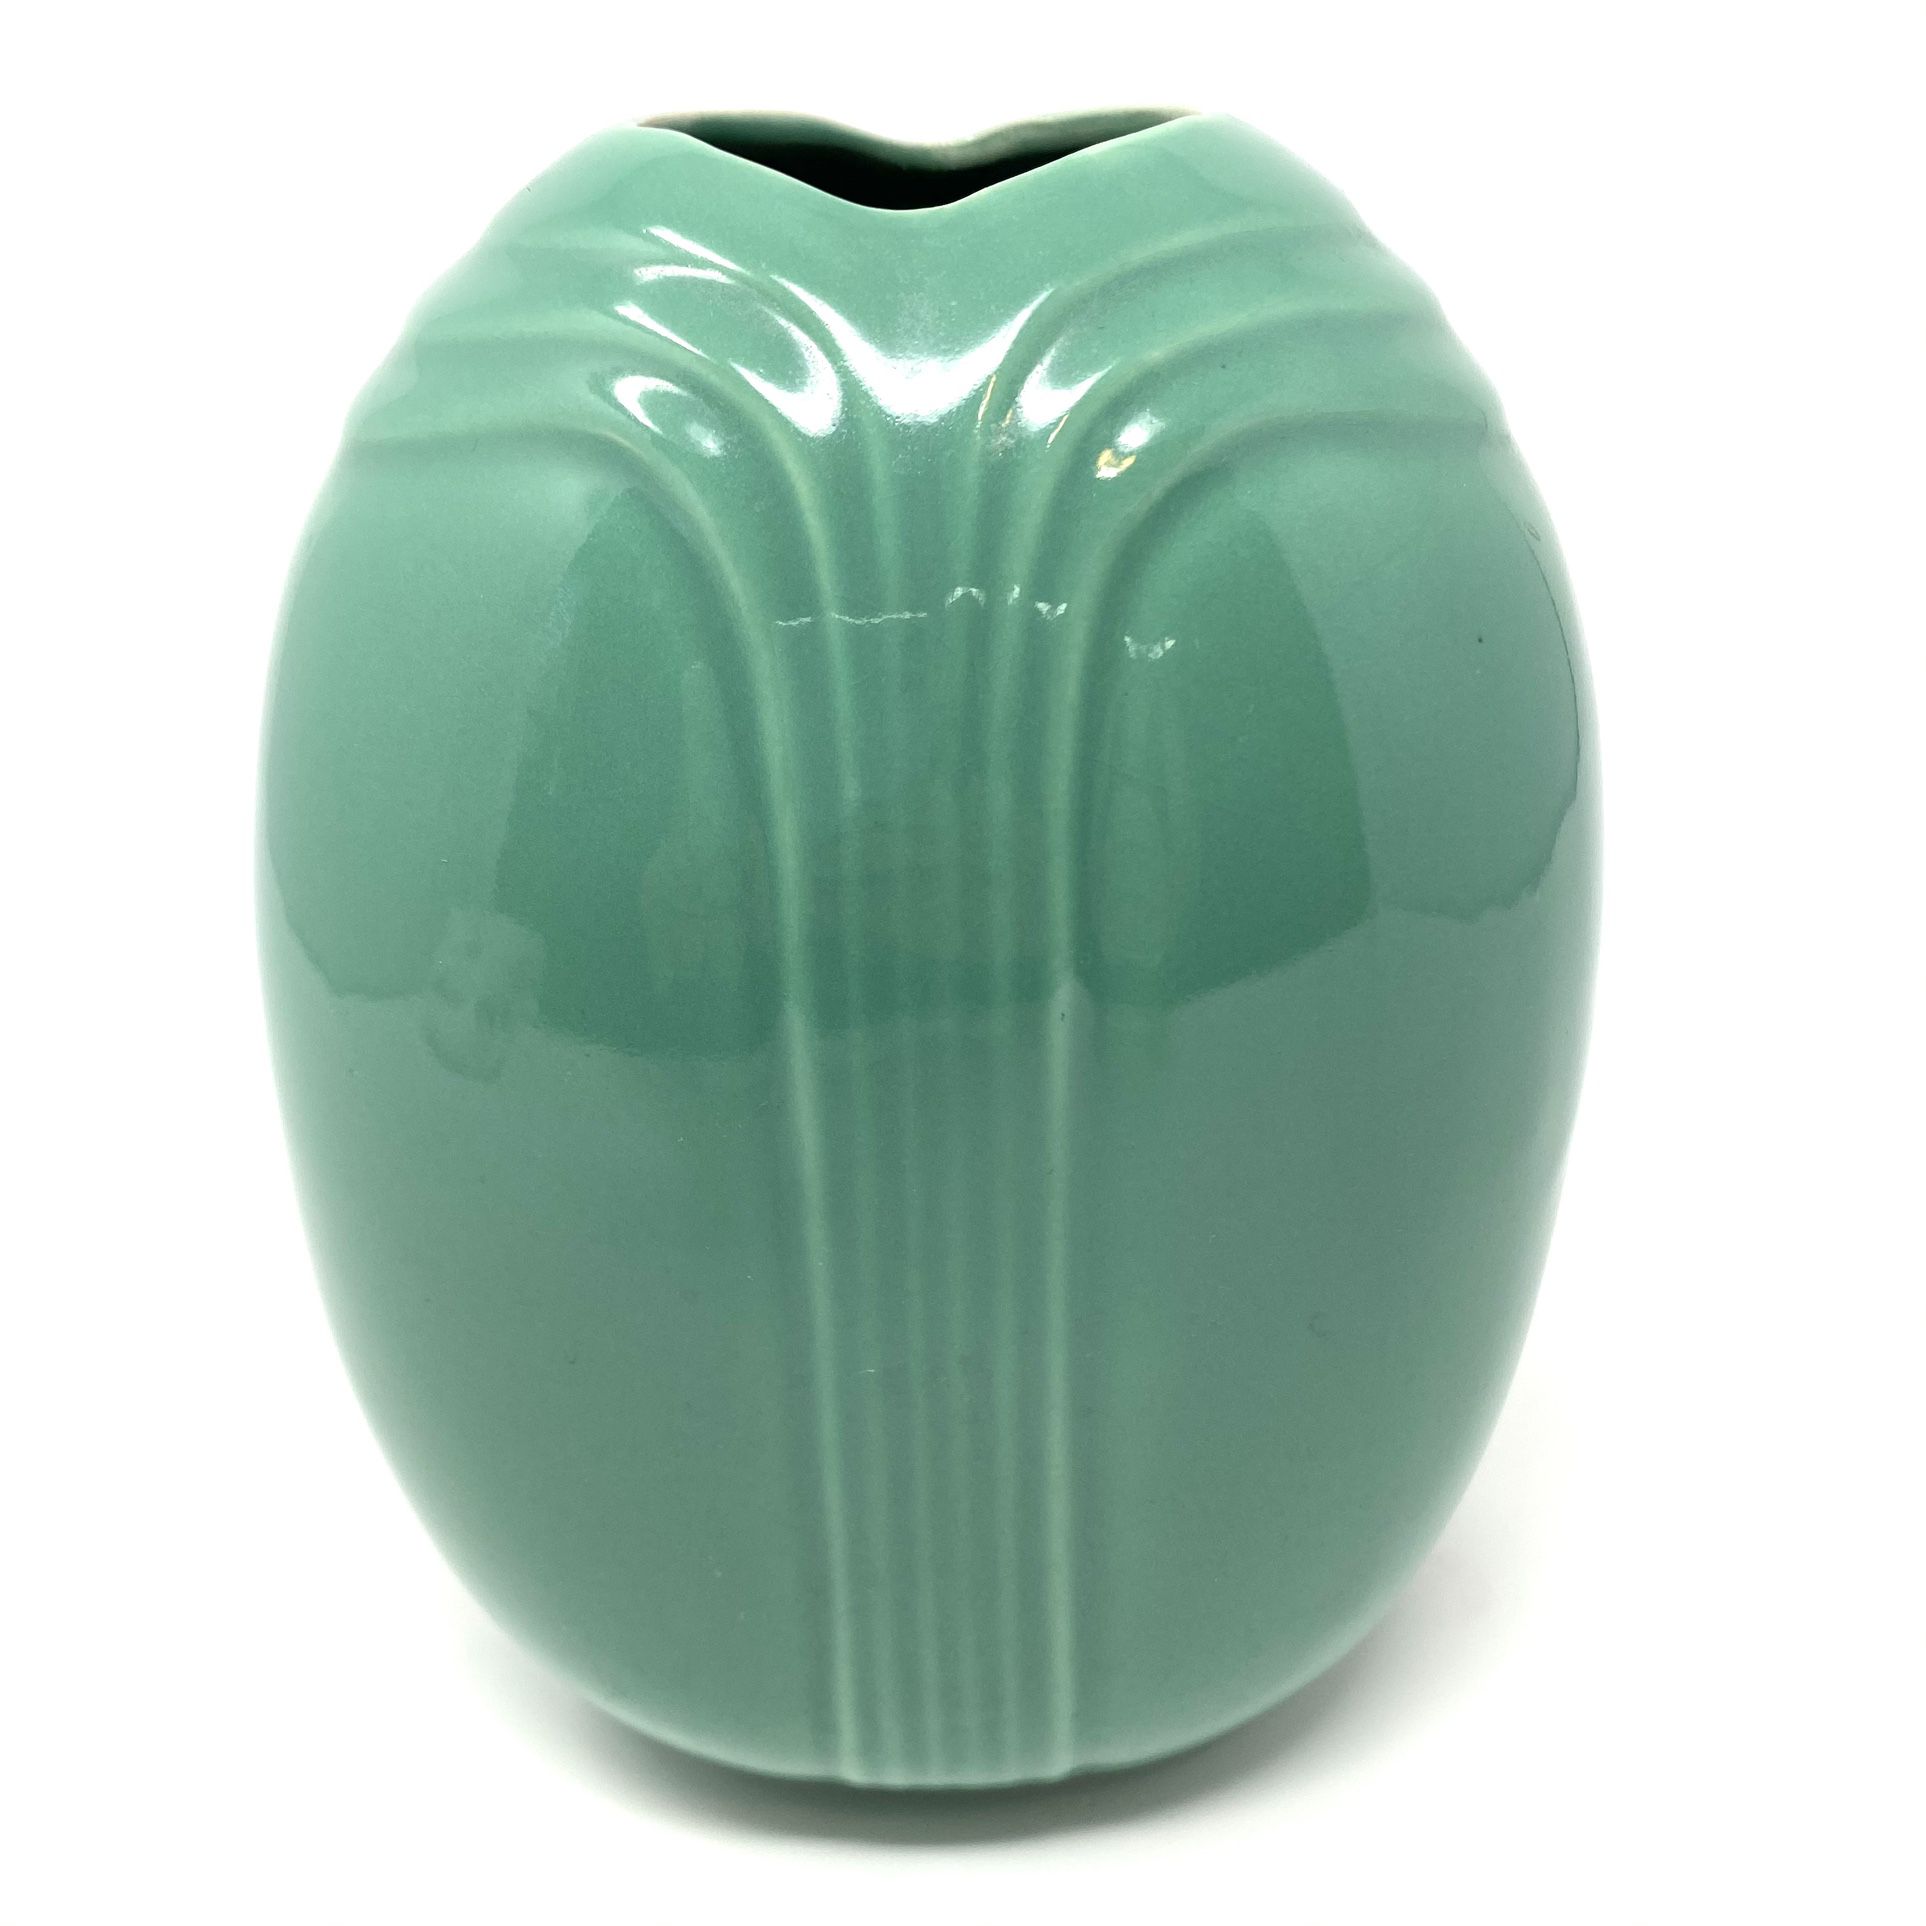 Vintage Teal Art Deco Style Ceramic Vase  